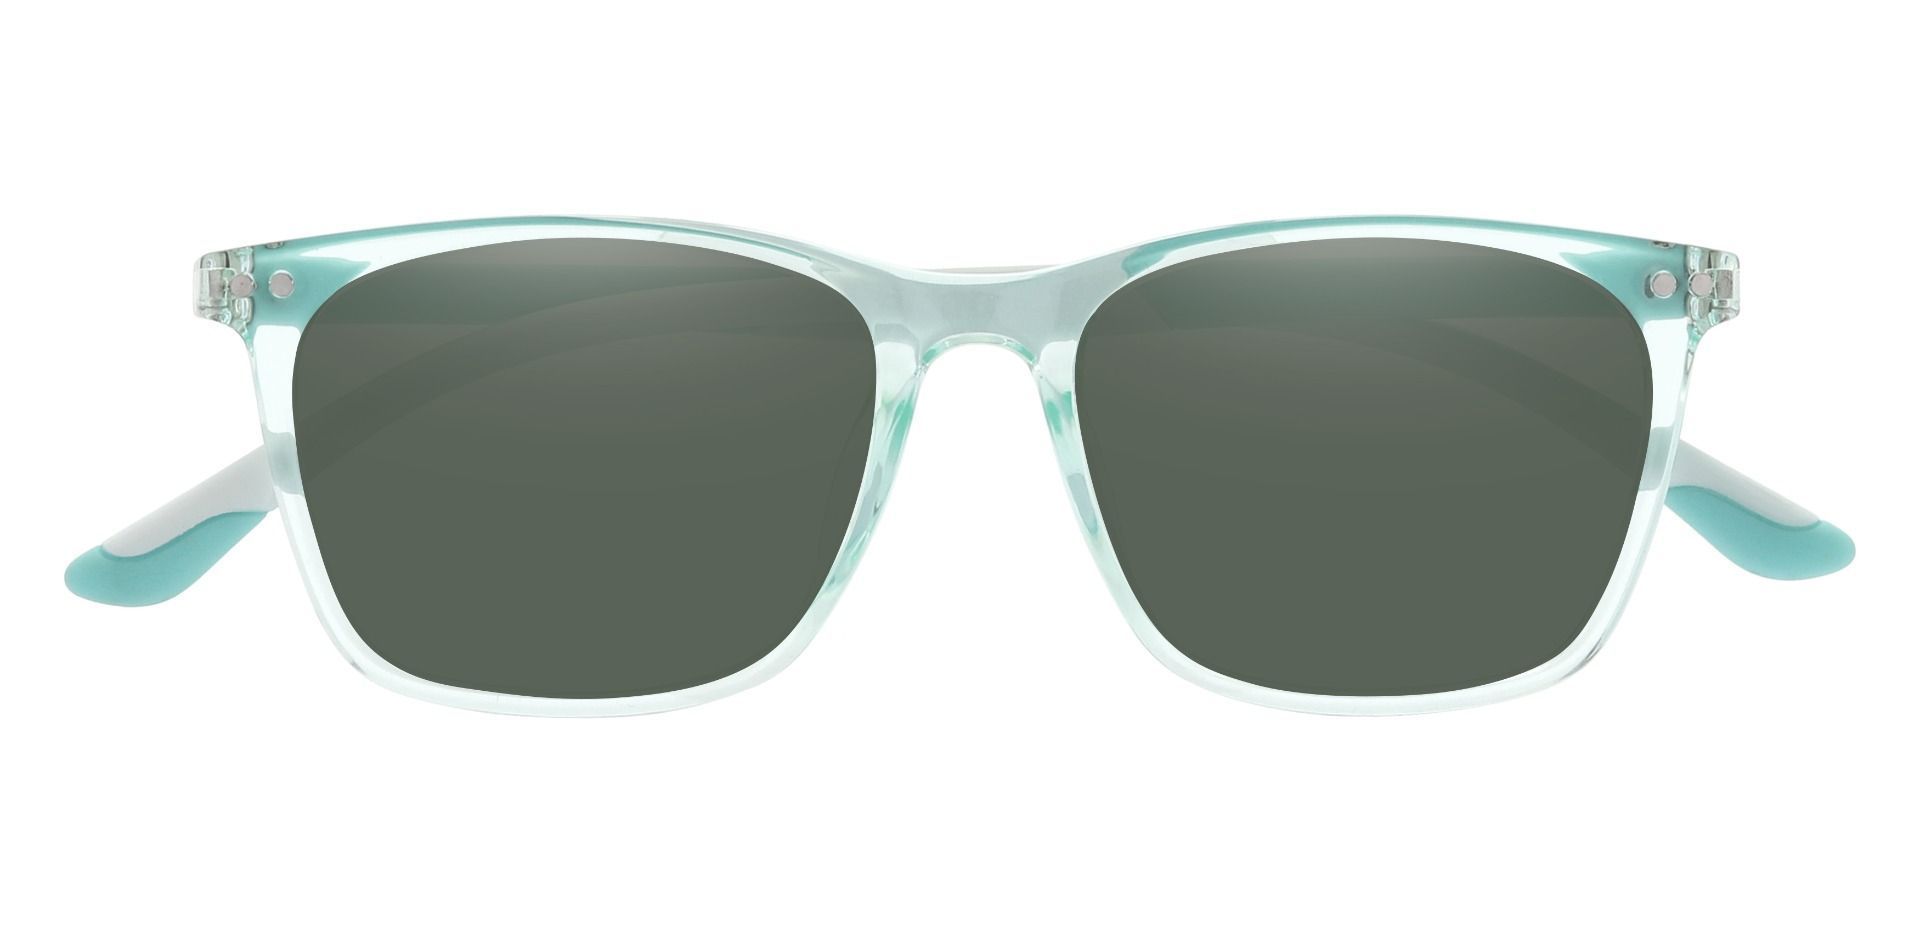 Slane Square Prescription Sunglasses - Blue Frame With Green Lenses